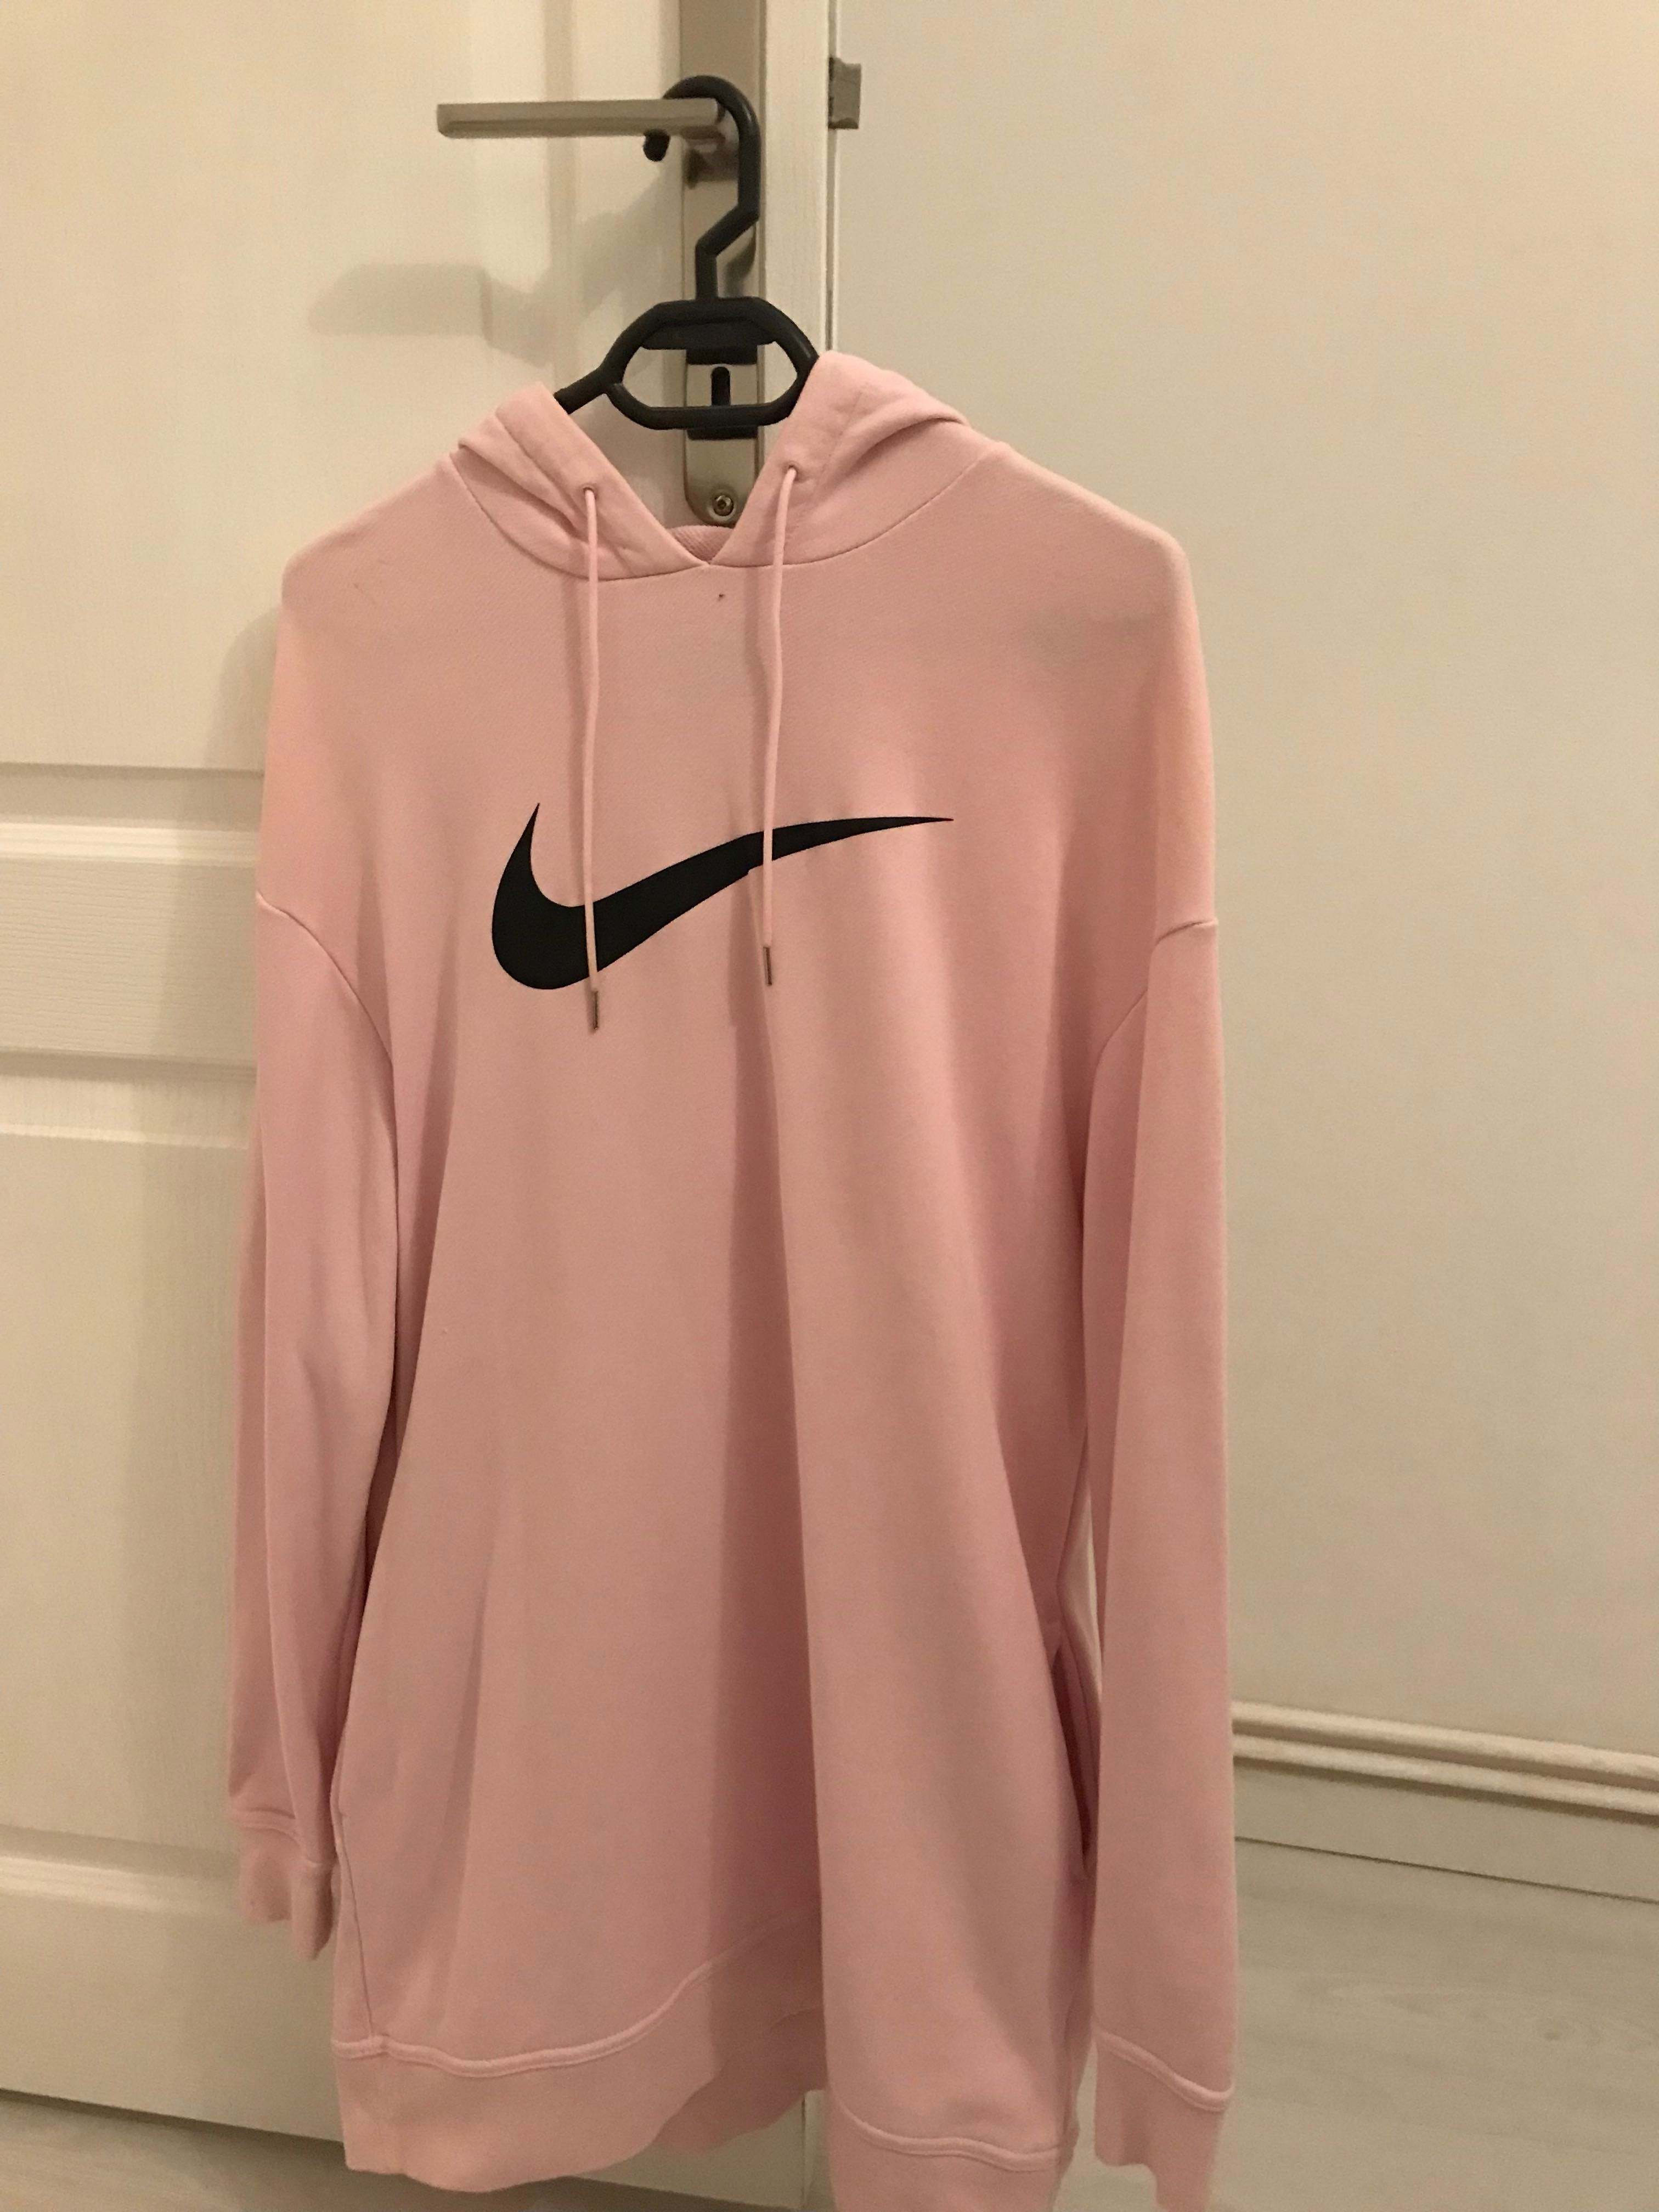 Hanorac cu glugă (hoodie) Nike roz lung